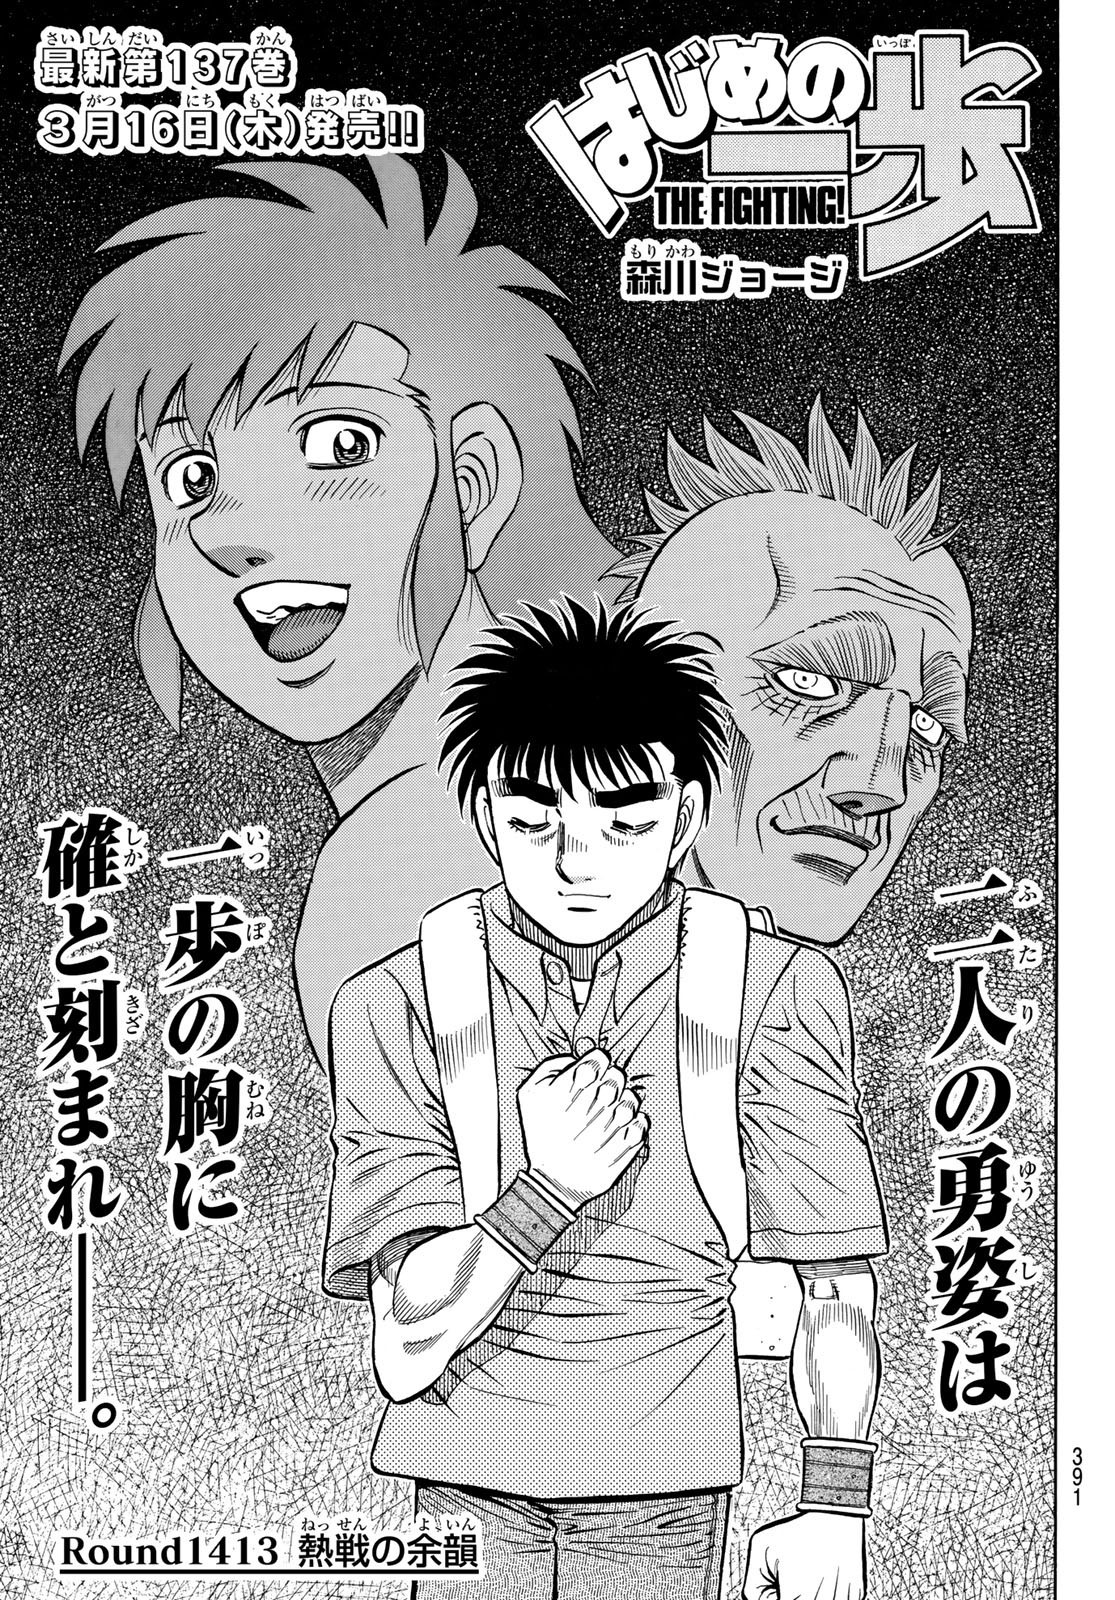 Hajime no Ippo - Chapter 1413 - Page 1